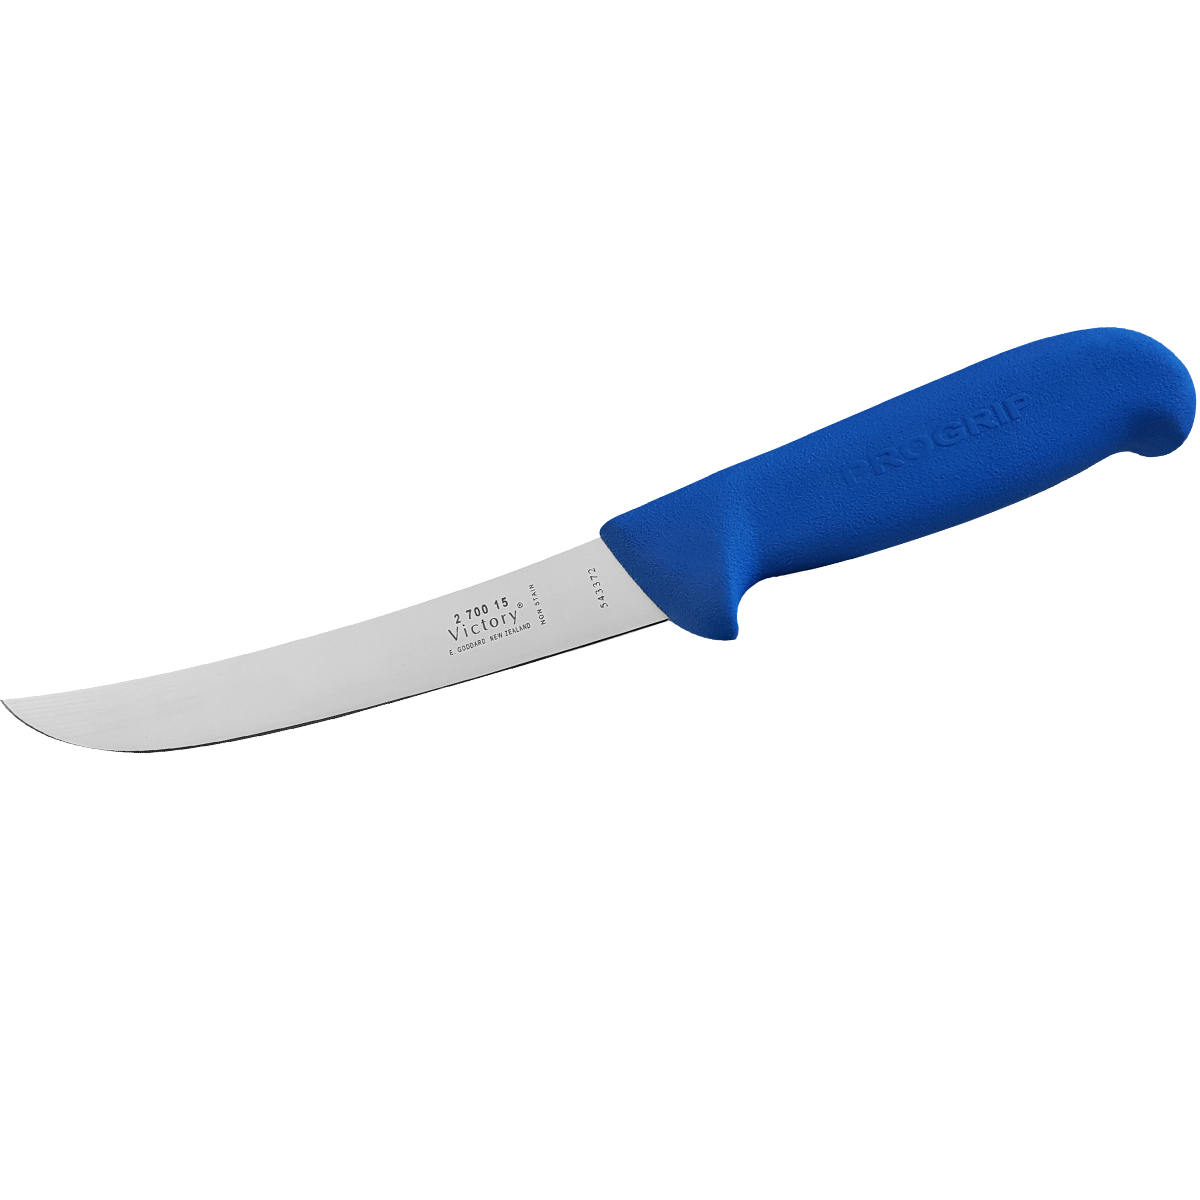 Victory Boning Knife, 15cm (6) - Curved, Progrip - Blue